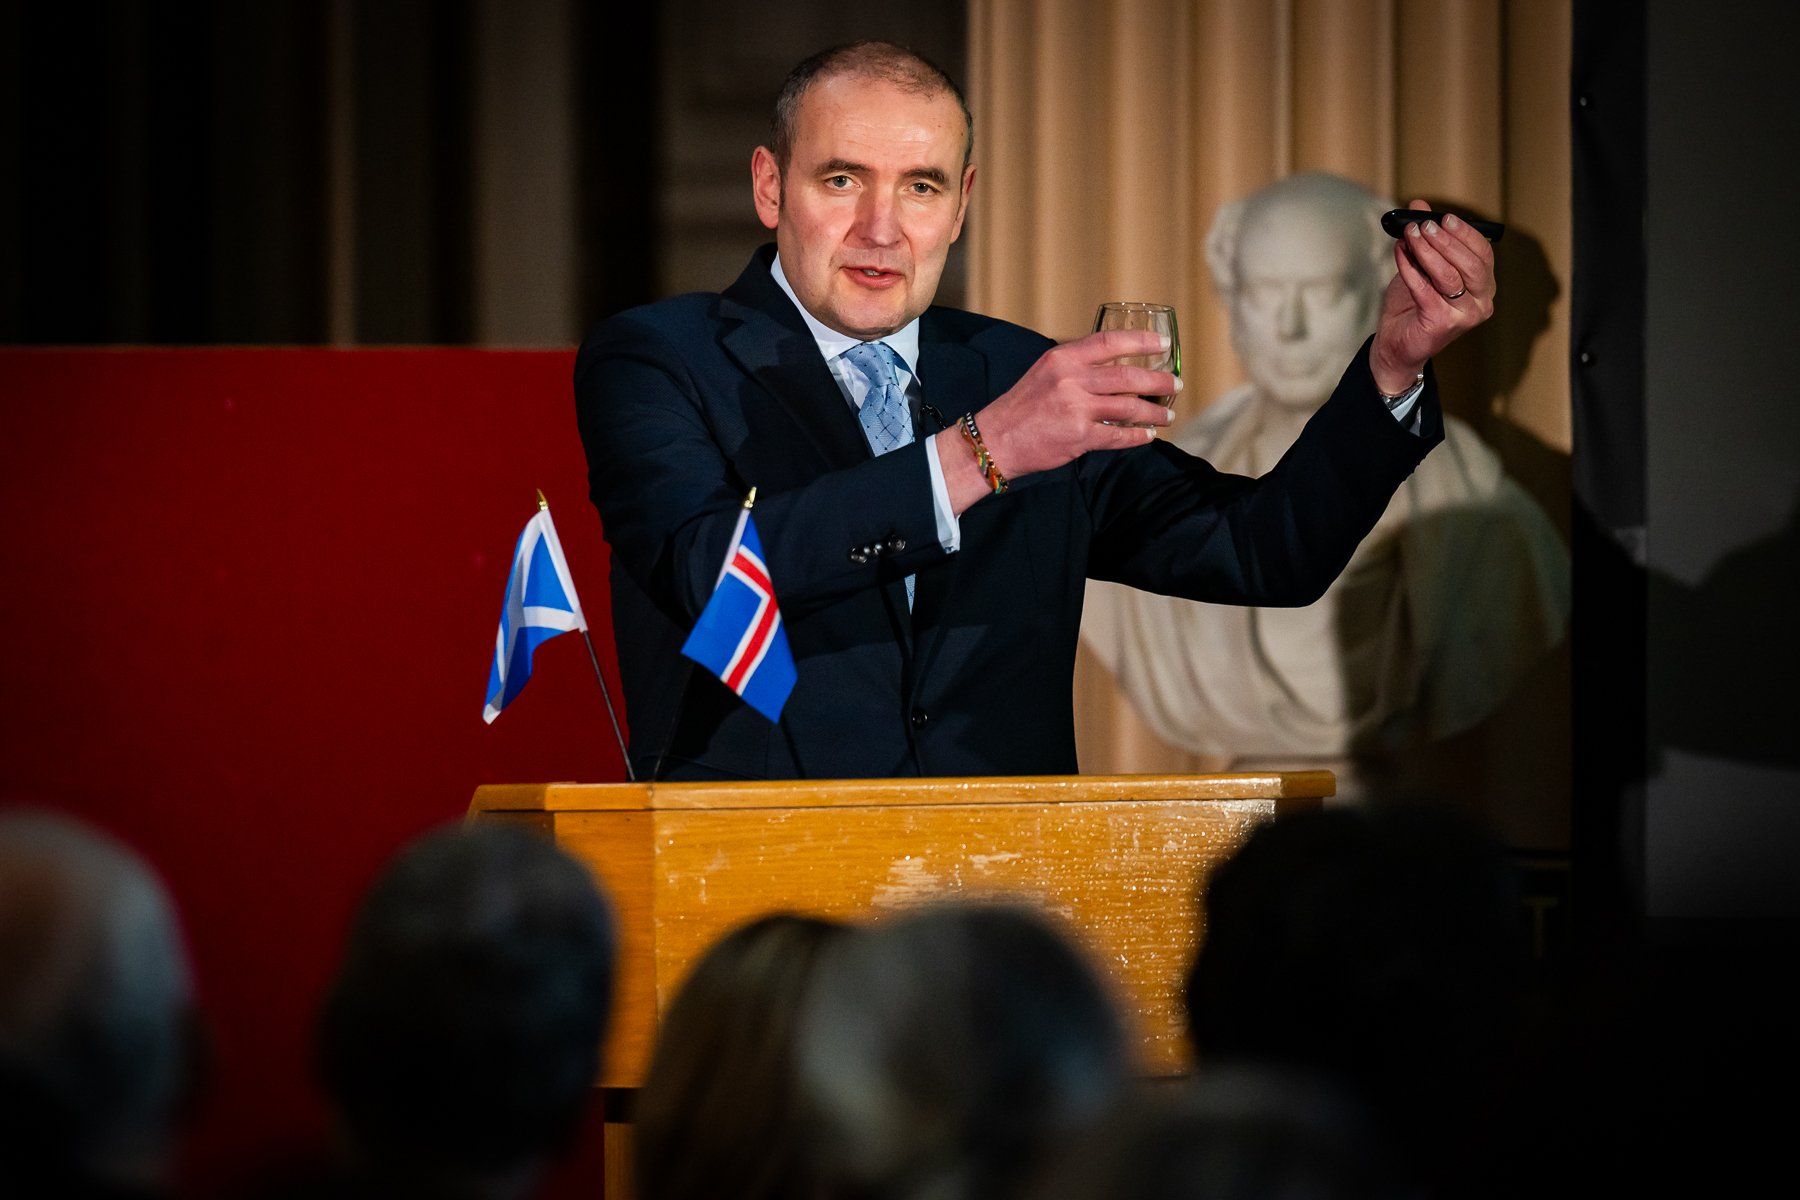 Dr Guðni Thorlacius Jóhannesson, President of Iceland